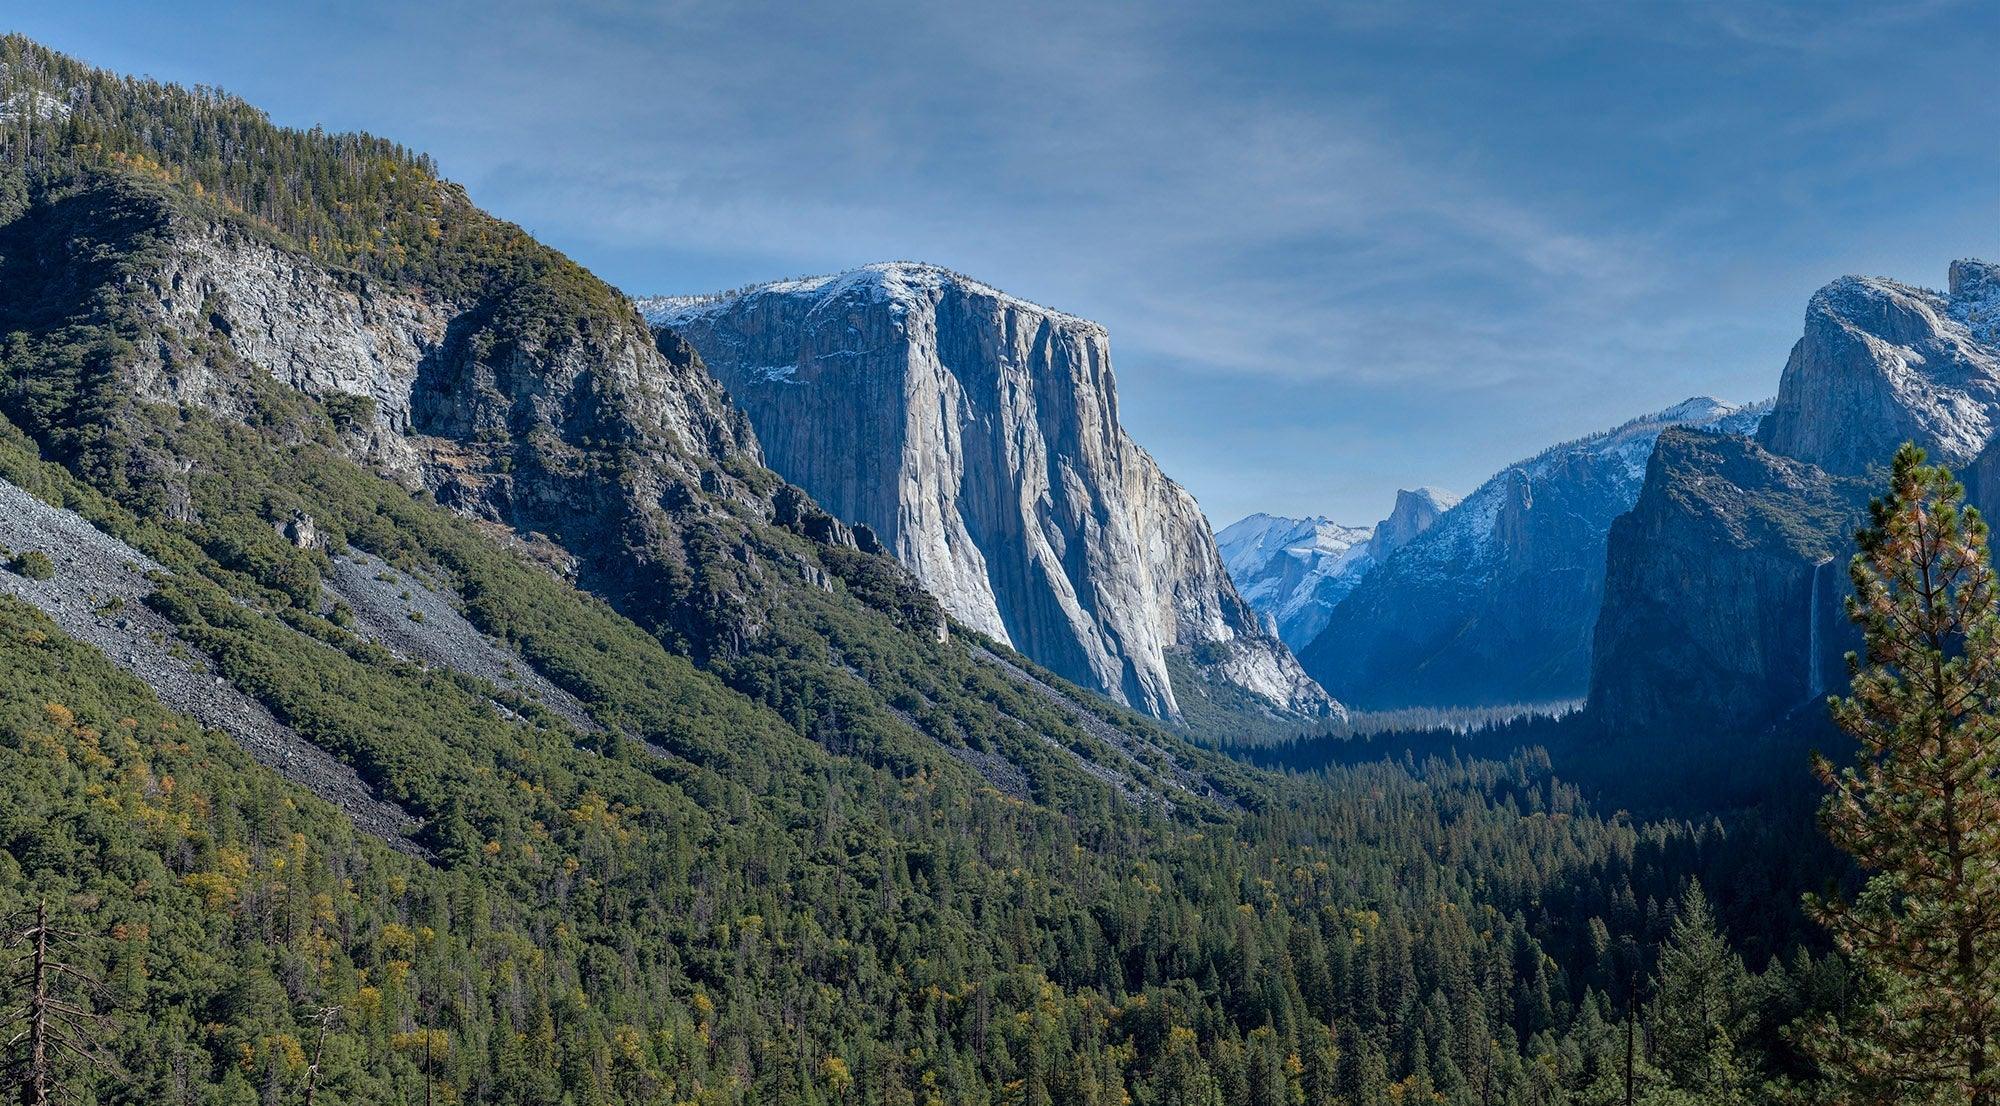 CoolWalls.ca Background Yosemite El Capitan Daytime image, High resolution GigaPixel Image